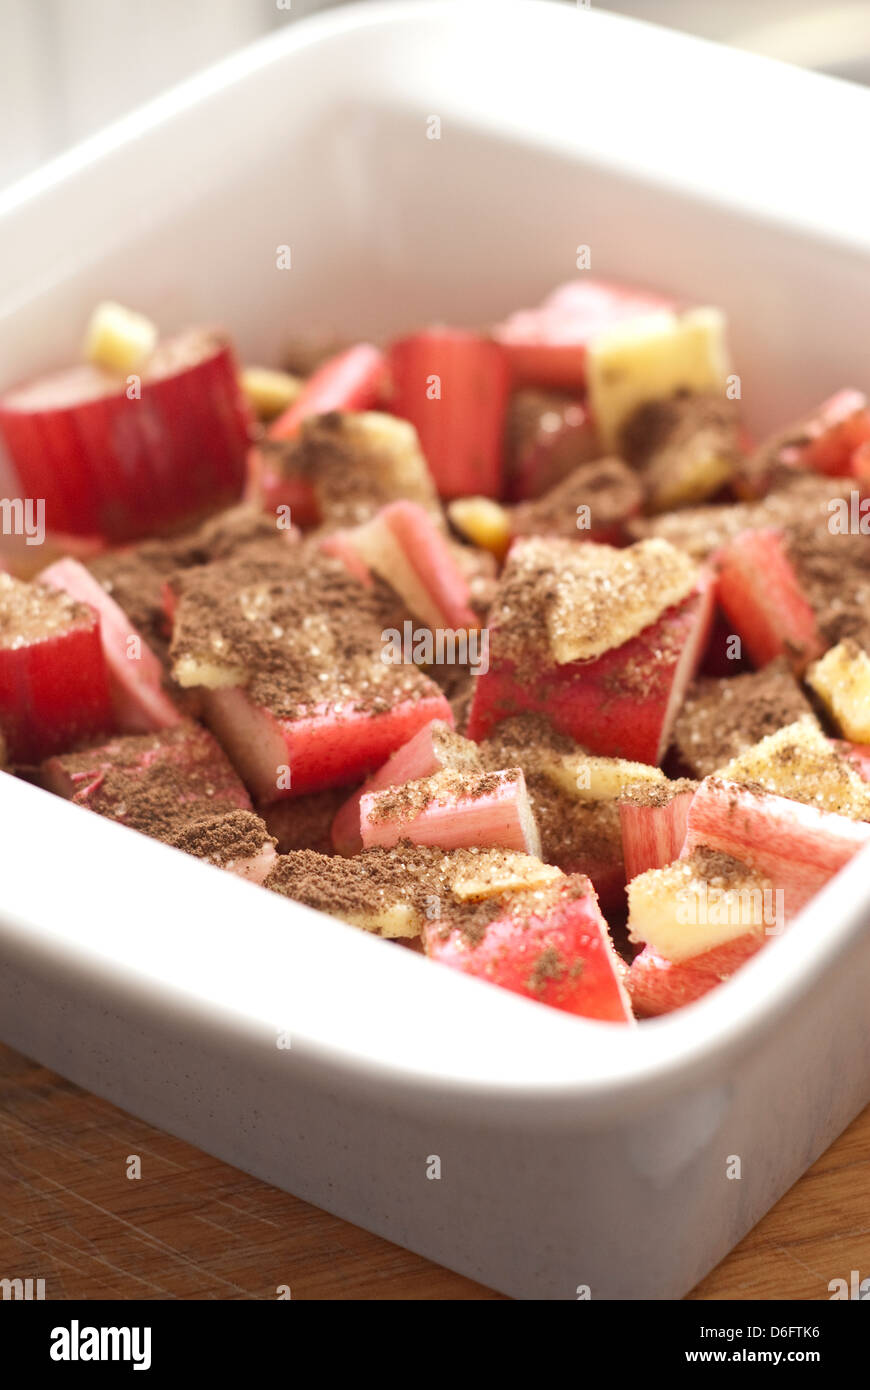 rhubarb brulee - step shot - ingredients in a baking dish Stock Photo